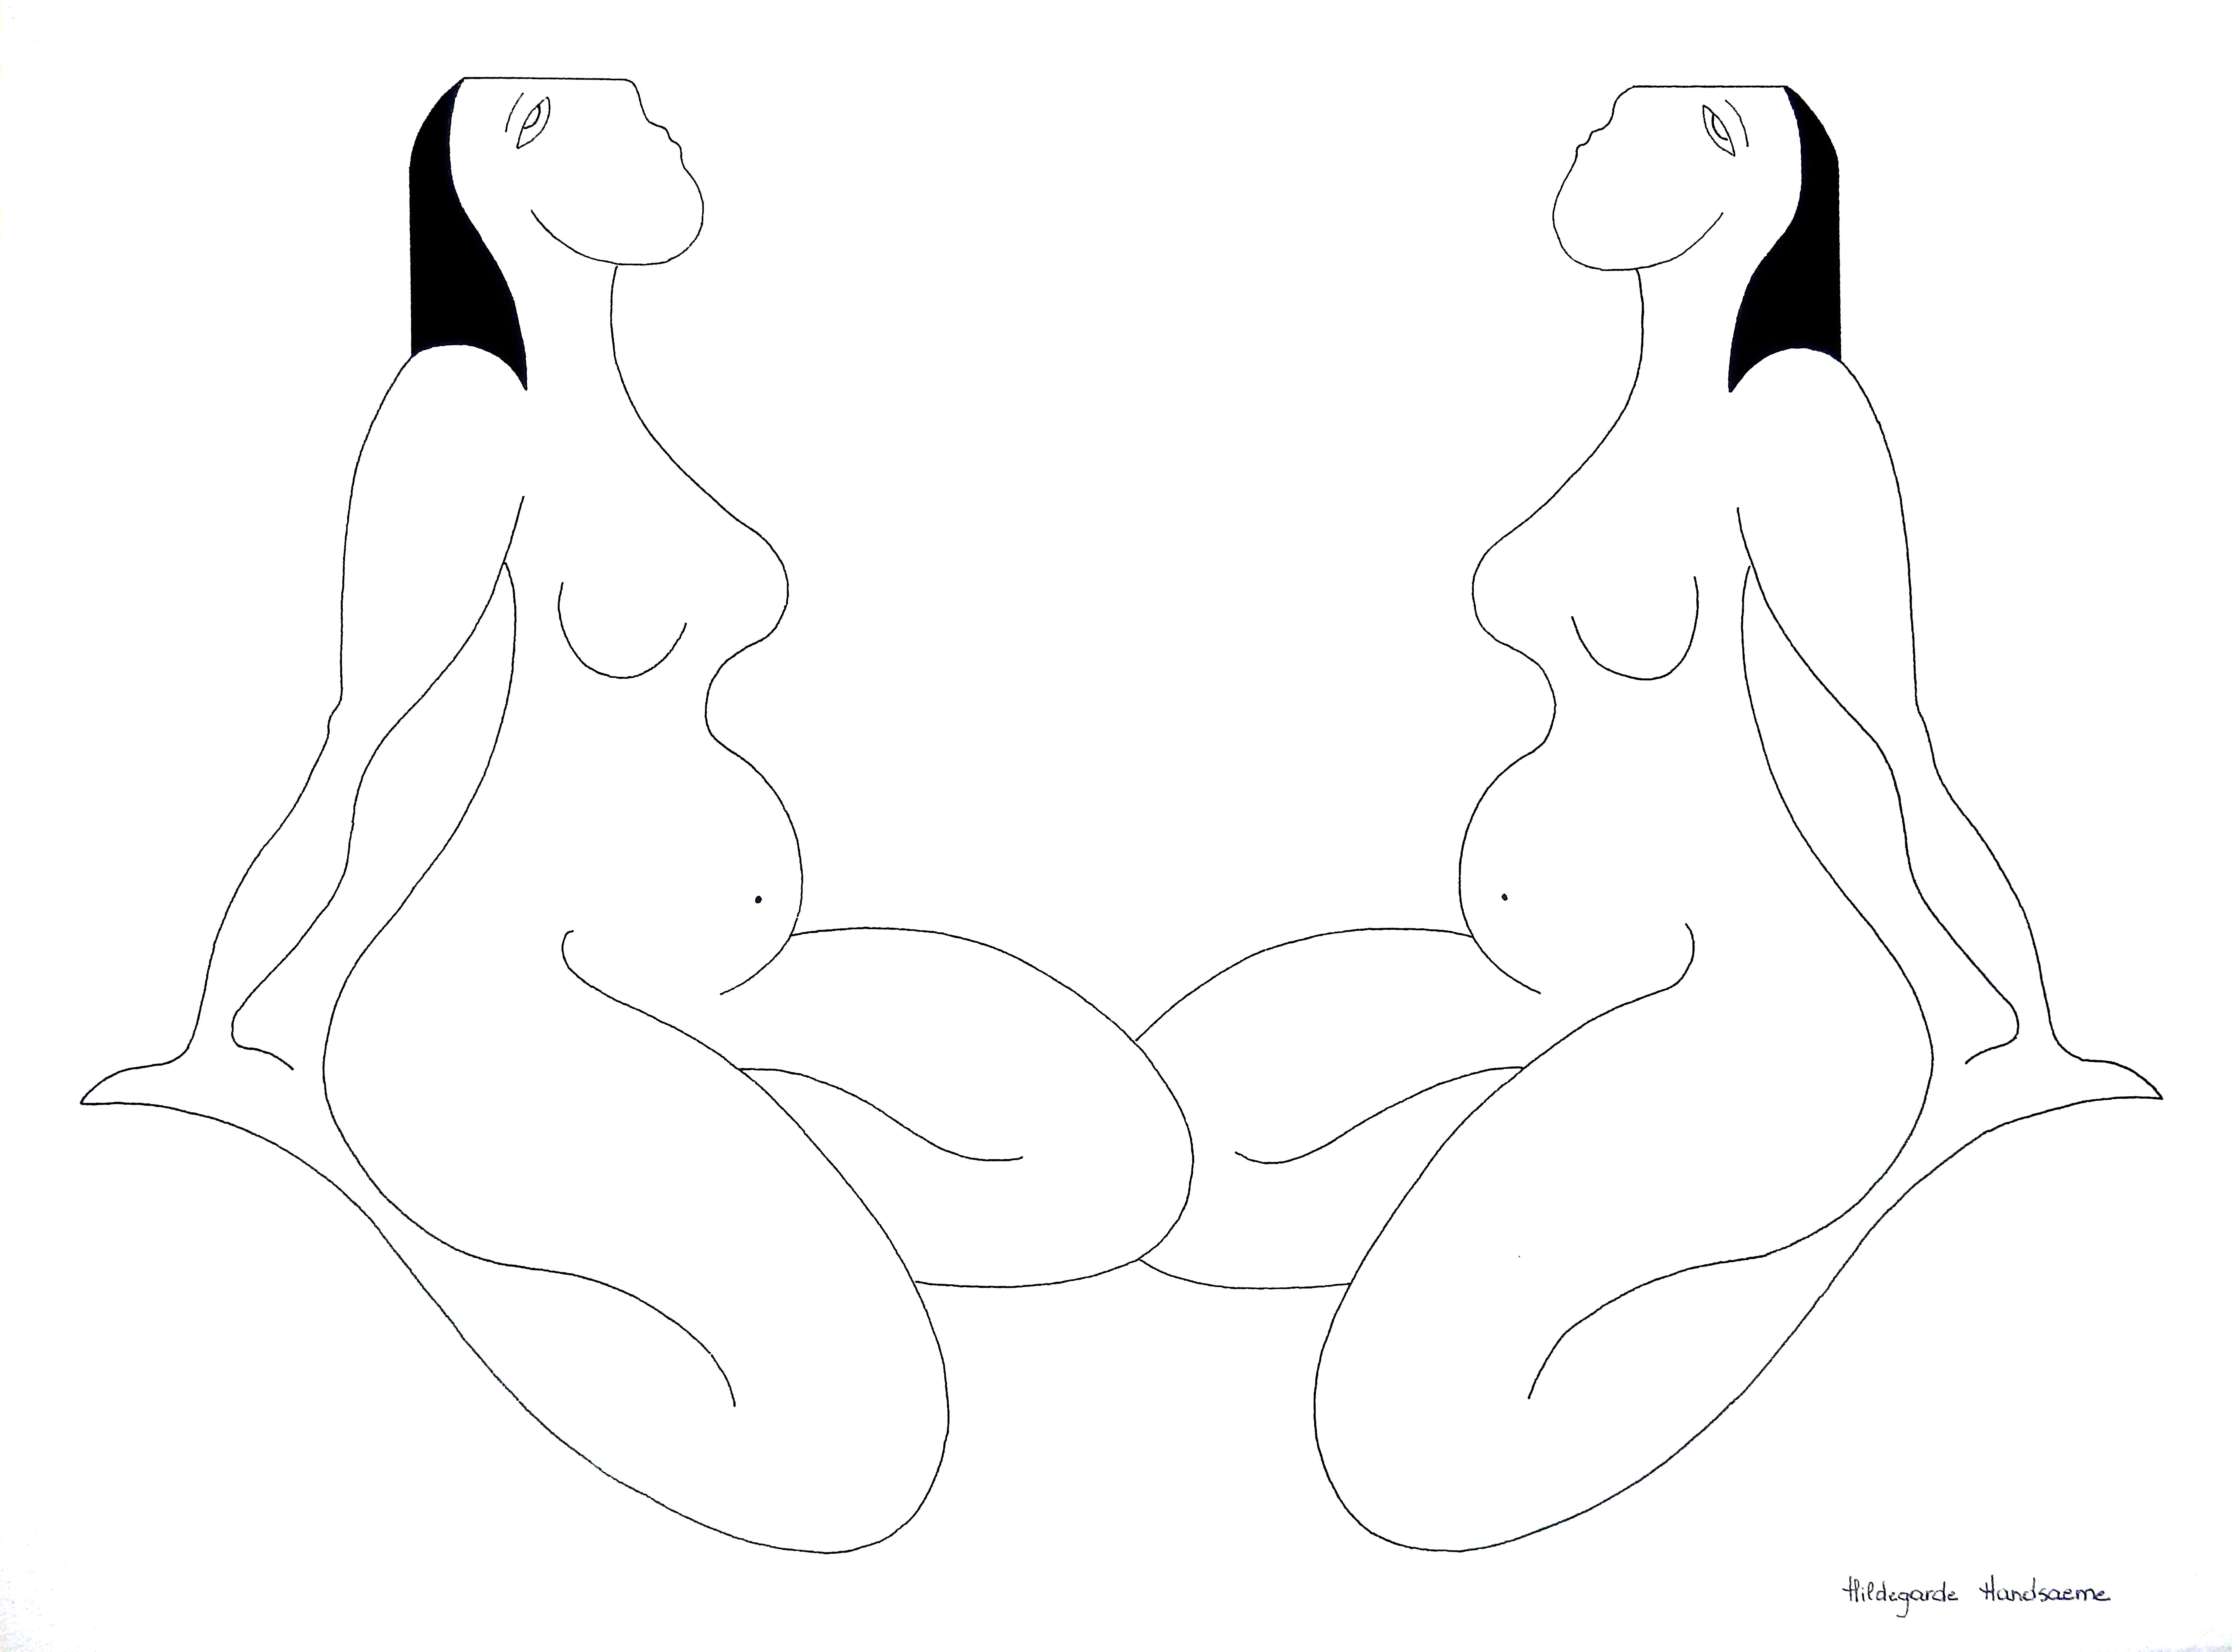 Hildegarde Handsaeme Abstract Drawing – Les Feminines, Modern Minimalist Abstract Geometric Art Ink Drawing Woman Black